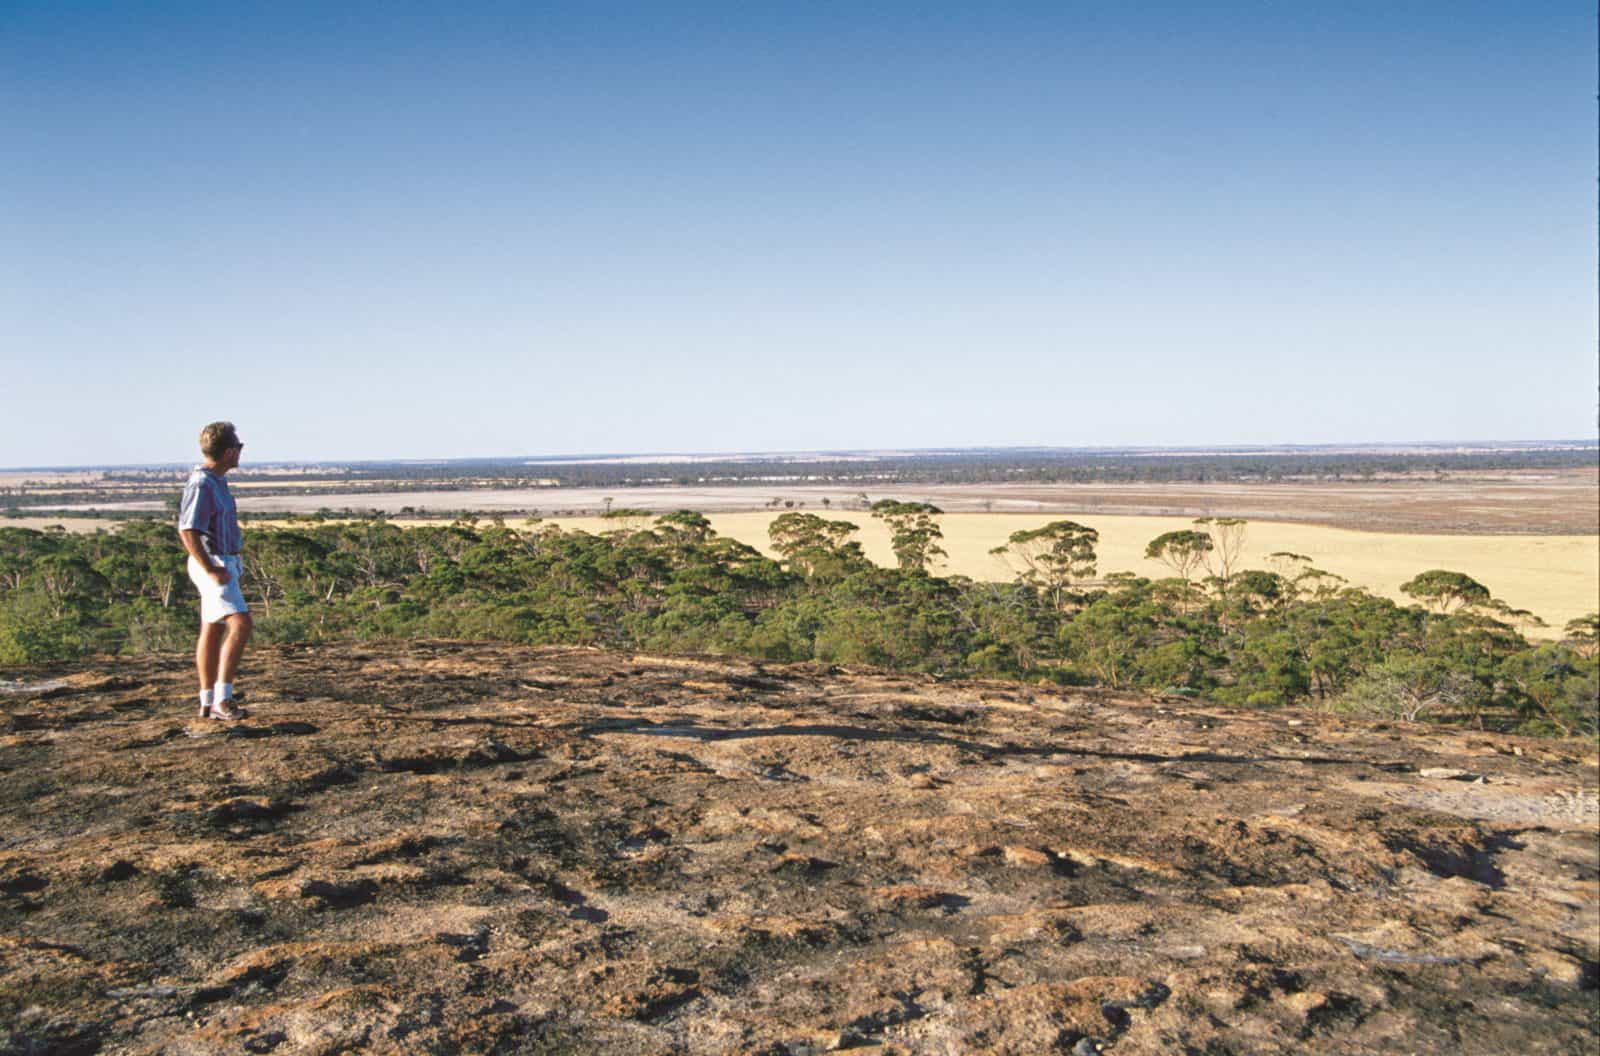 Marshall Rock, Bencubbin, Western Australia